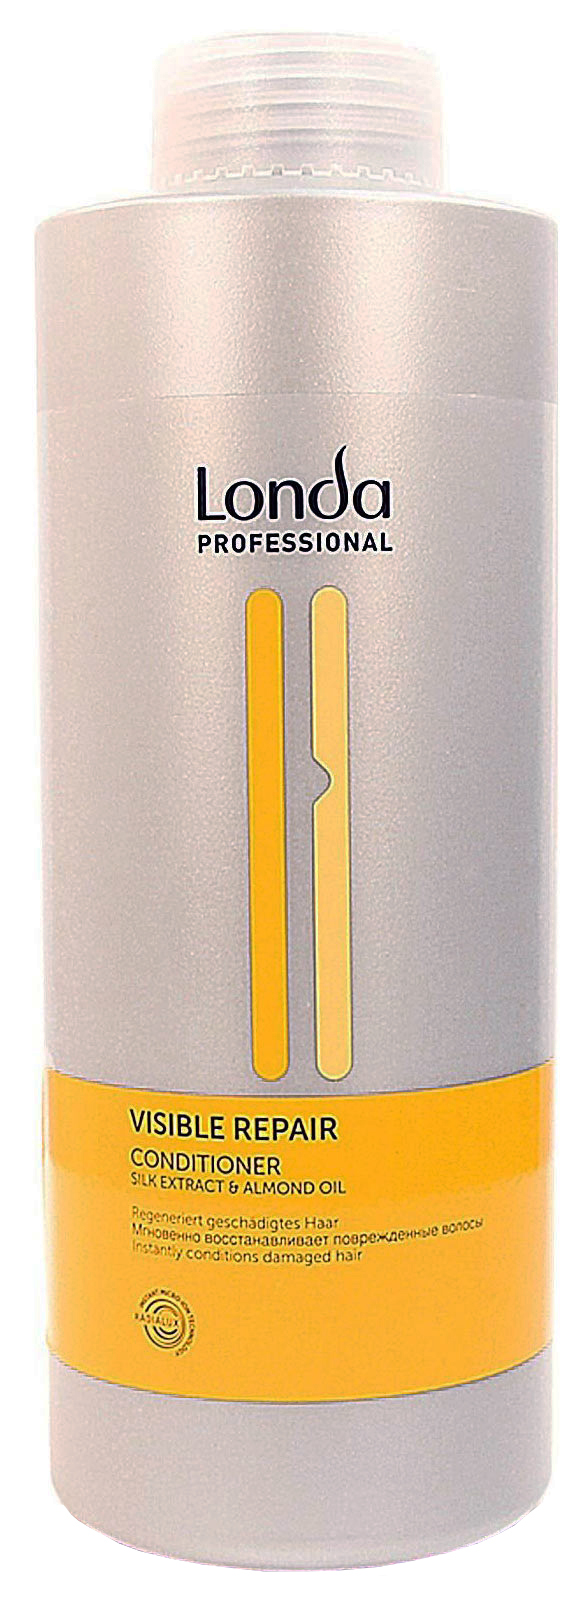 Кондиционер для волос Londa Professional Visible Repair 1000 мл кондиционер для поврежденных волос visible repair 4329 7991 1000 мл